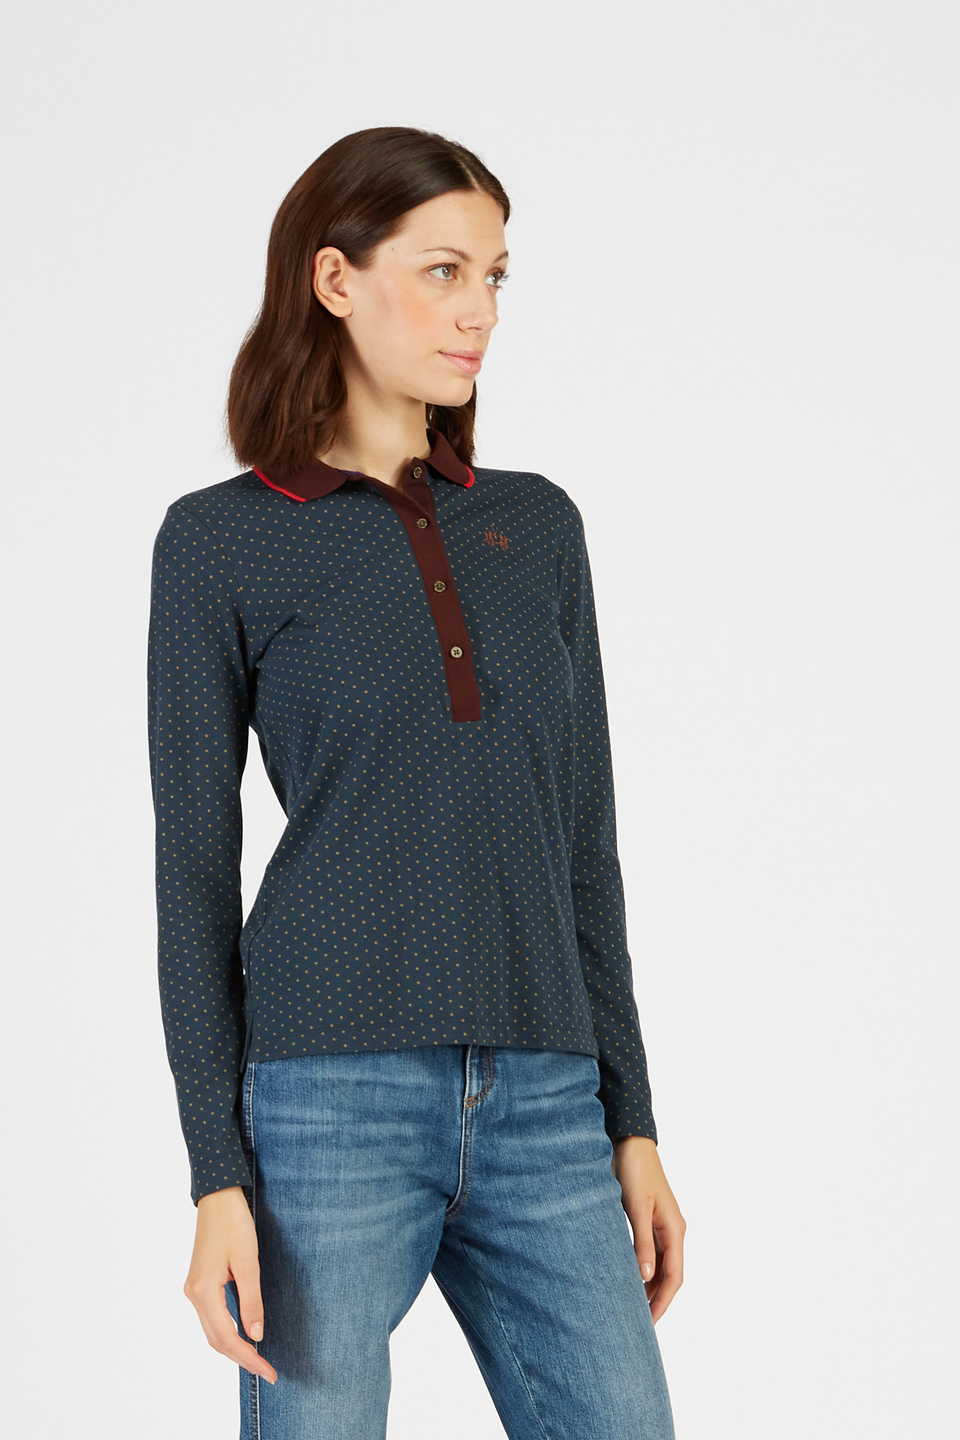 Argentina Damen Langarm-Poloshirt aus Regular Fit Stretch-Baumwolle | La Martina - Official Online Shop